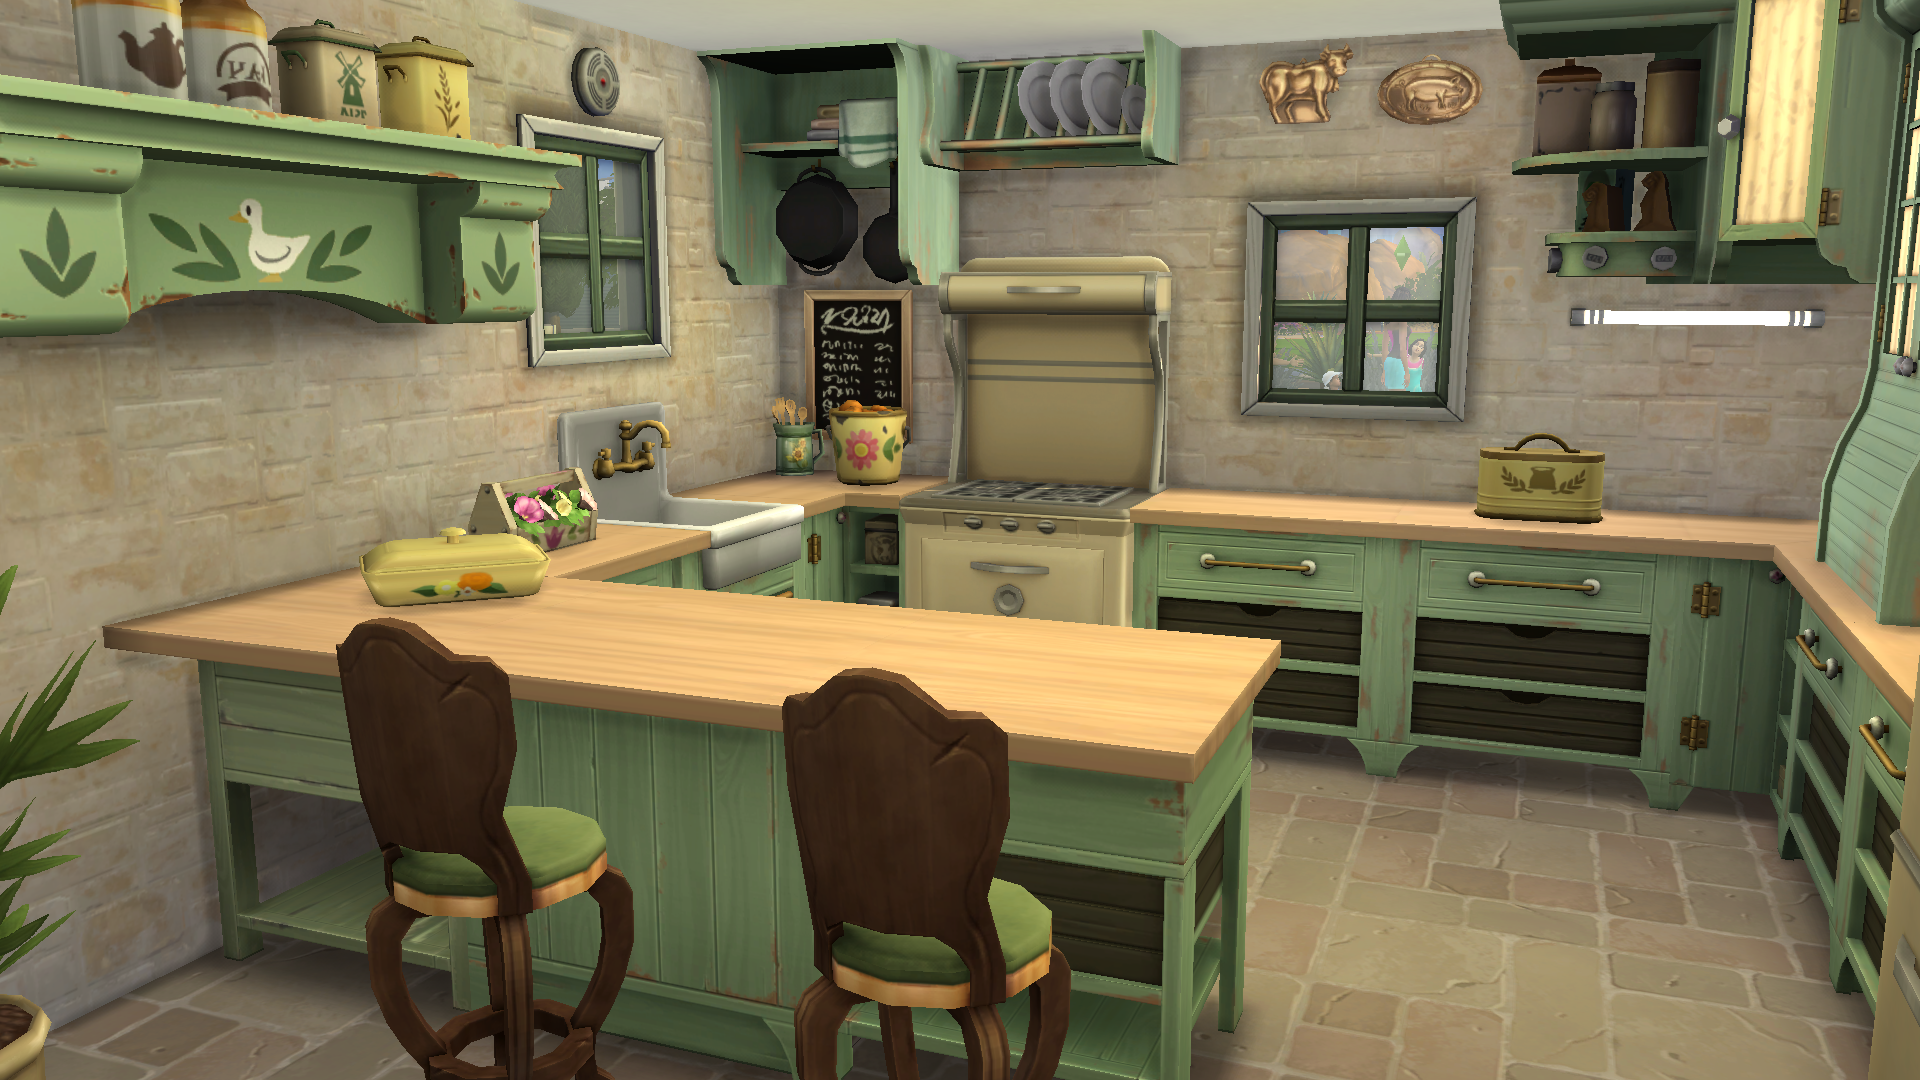 The Sims 4 - Country Kitchen Kit DLC Origin CD Key